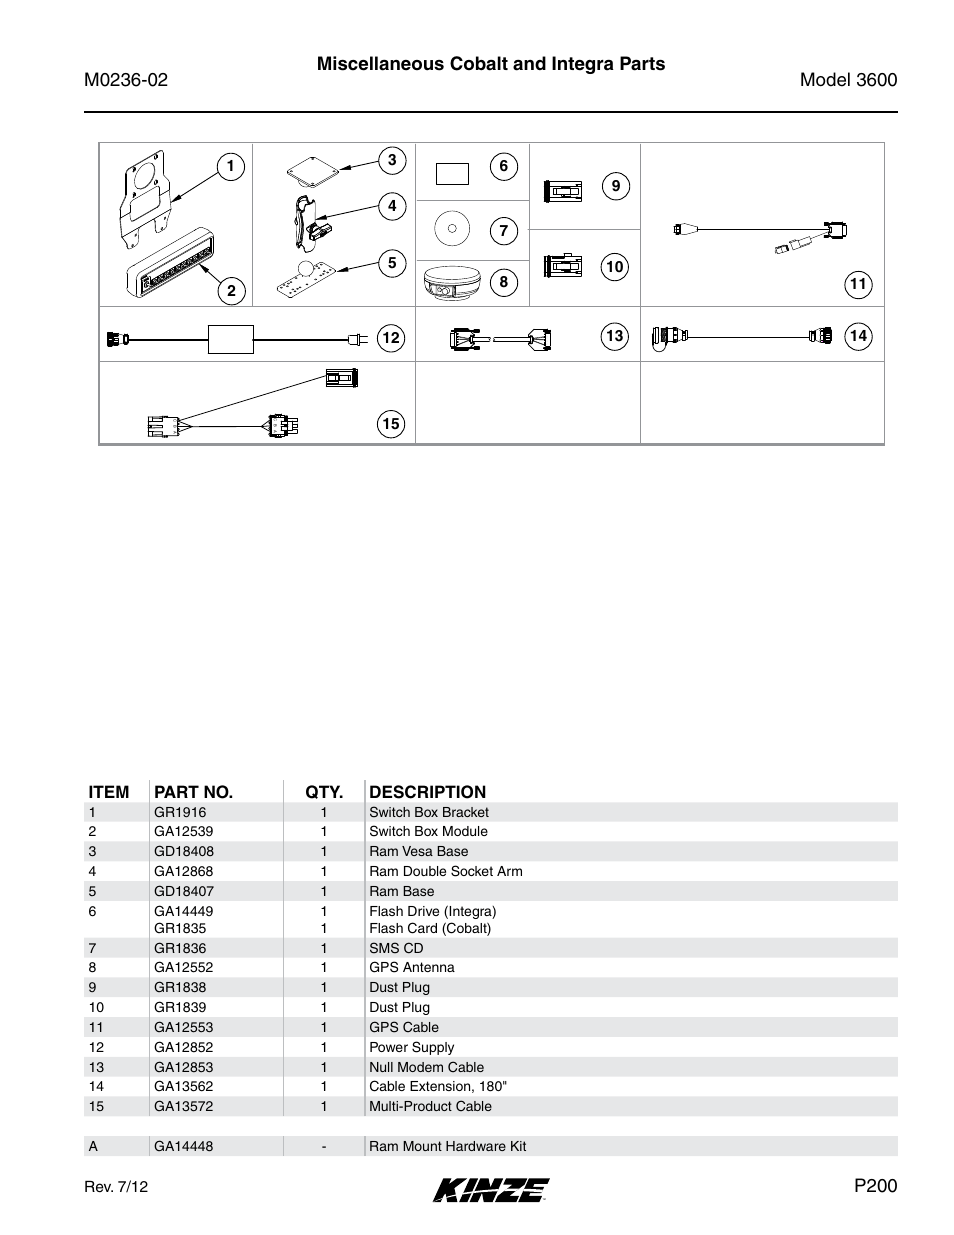 Miscellaneous cobalt and integra parts, P200, Item part no. qty. description | Kinze 3600 Lift and Rotate Planter Rev. 5/14 User Manual | Page 203 / 302